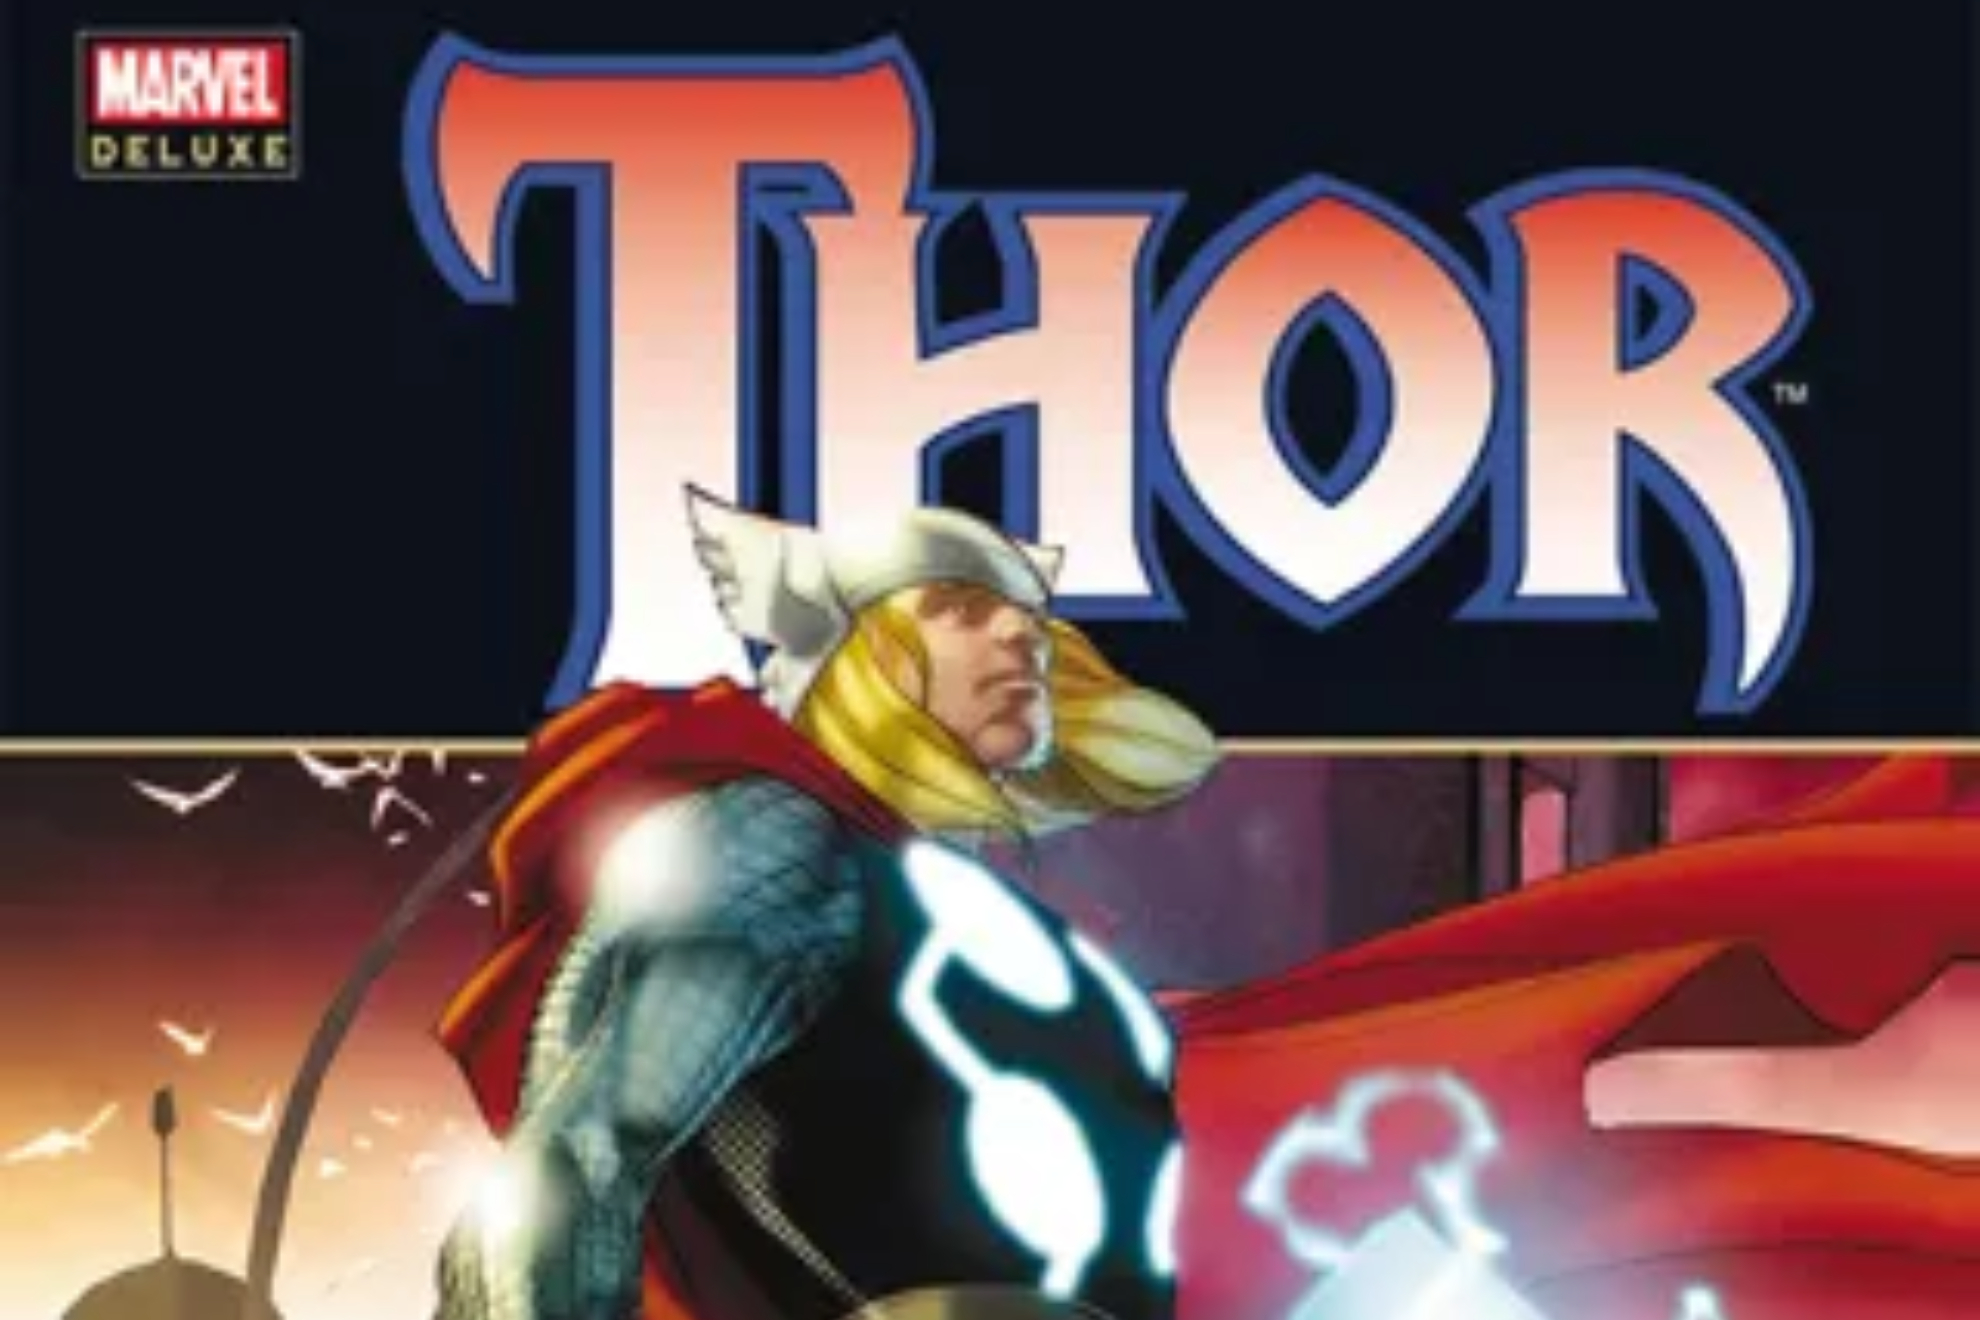 La etapa que Straczynski marc con 'Thor' es nica.